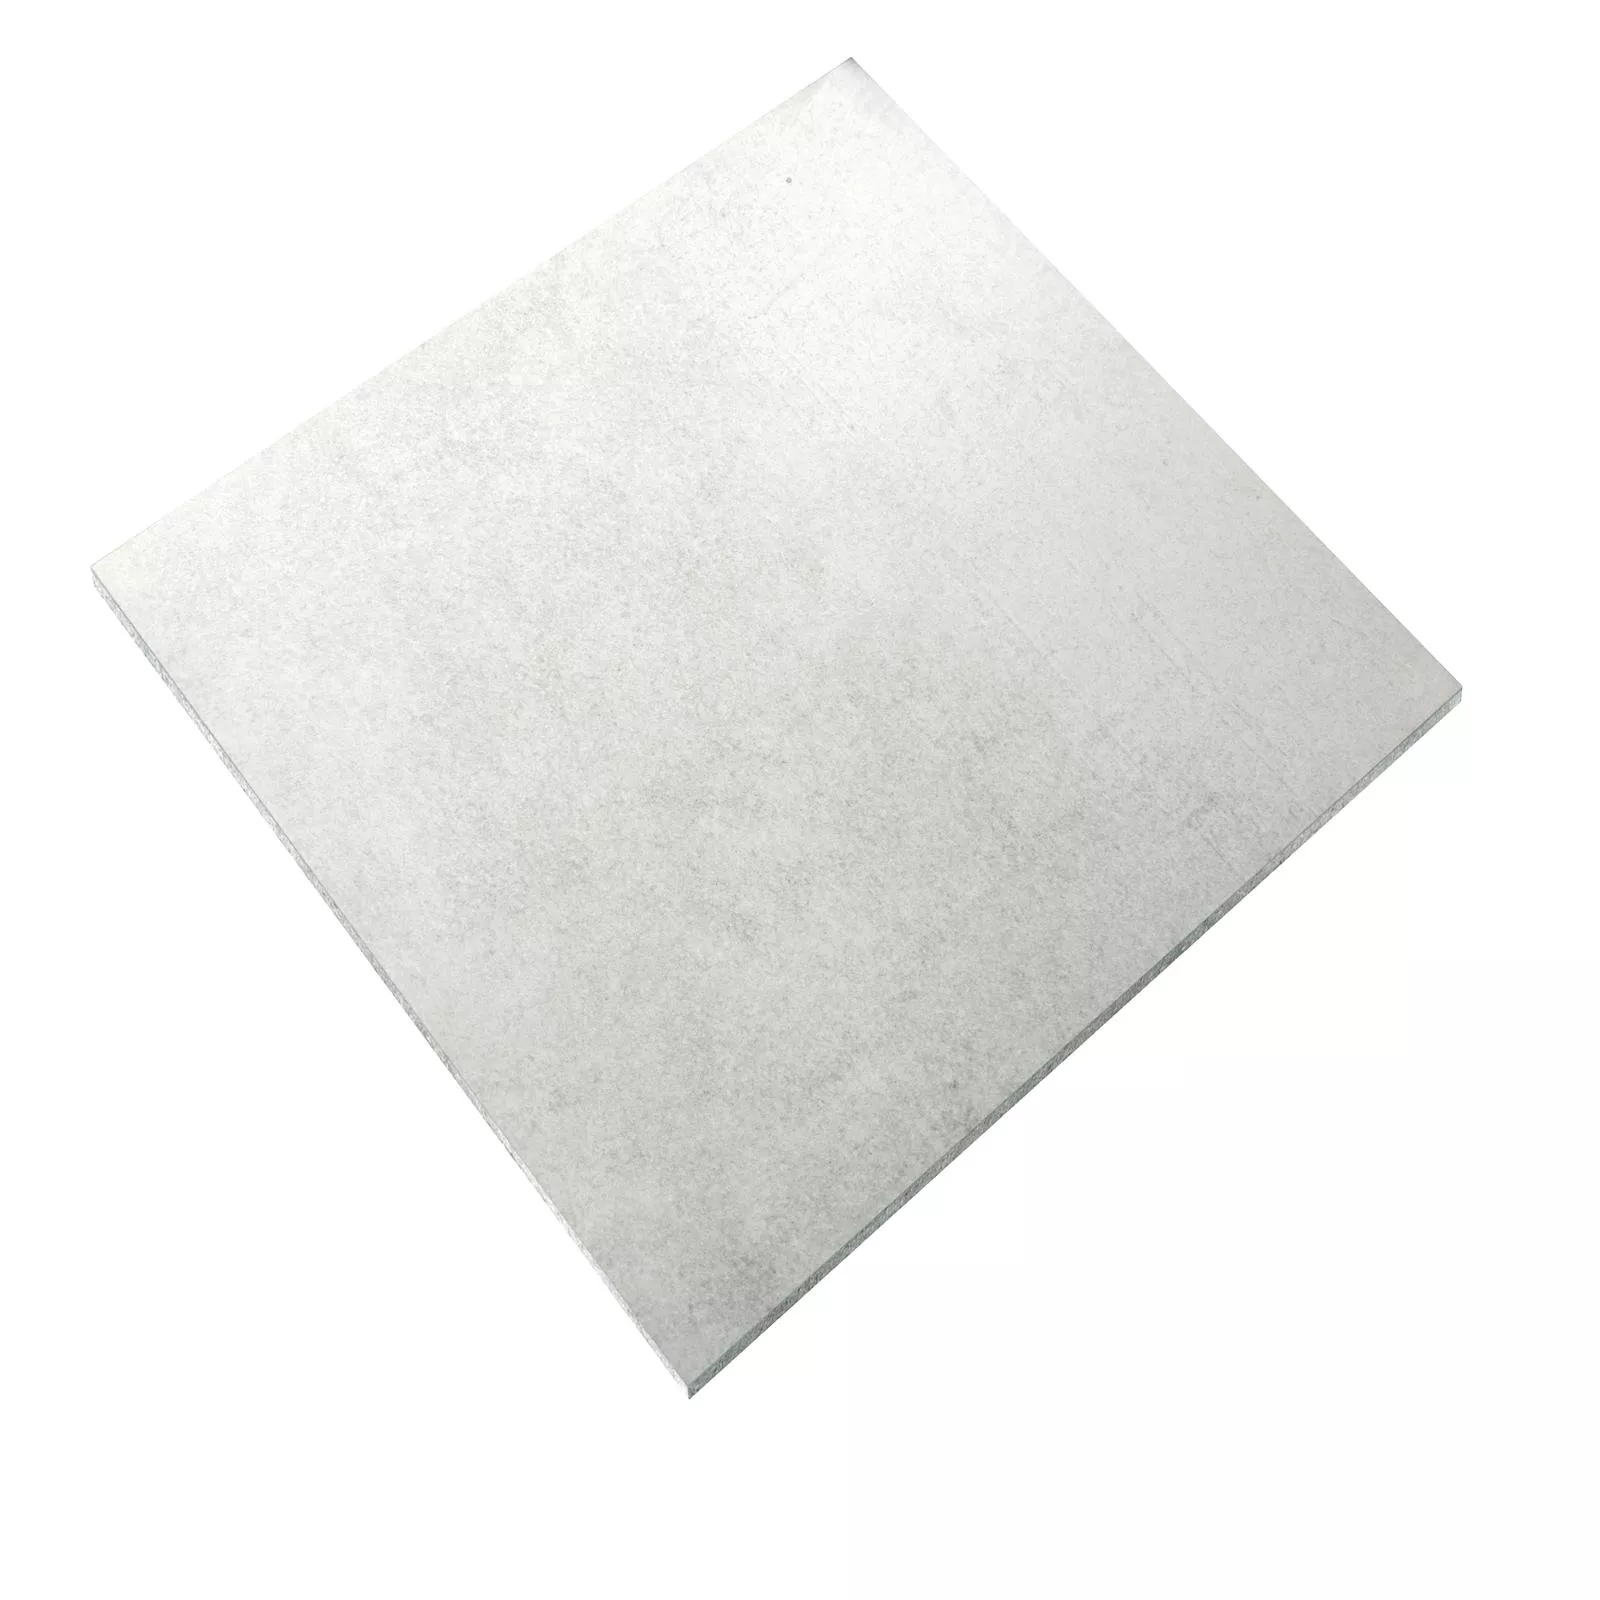 Sample Floor Tiles Beton Optic Alpago Ivory 40x40cm